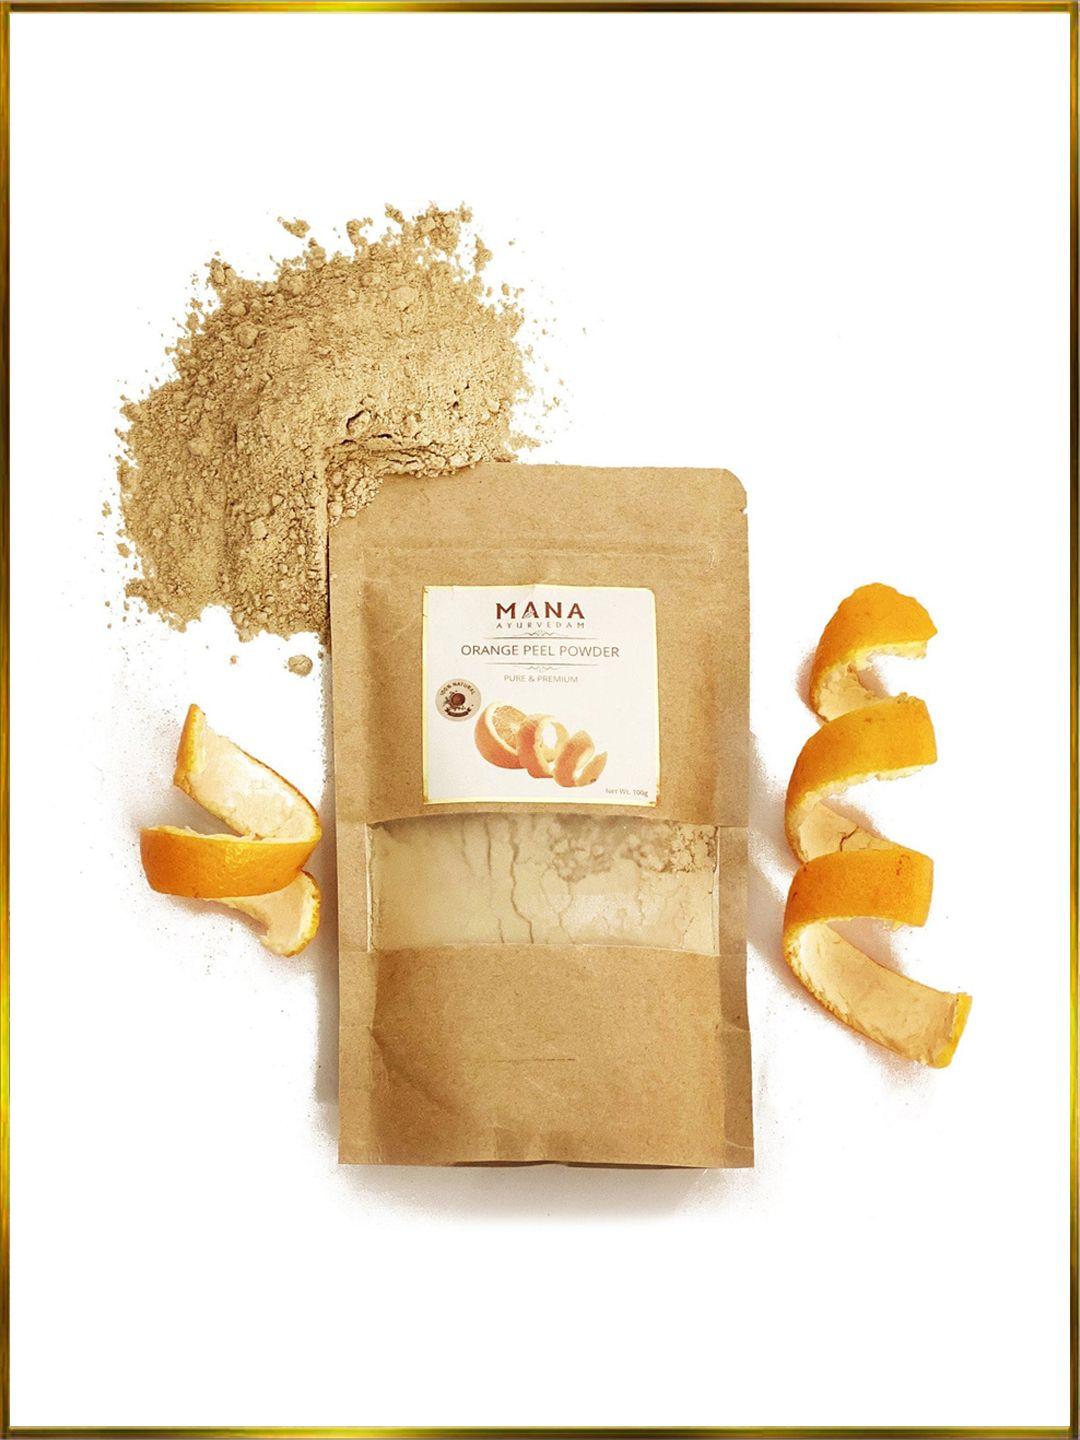 mana ayurvedam orange peel powder for dryness 100gm